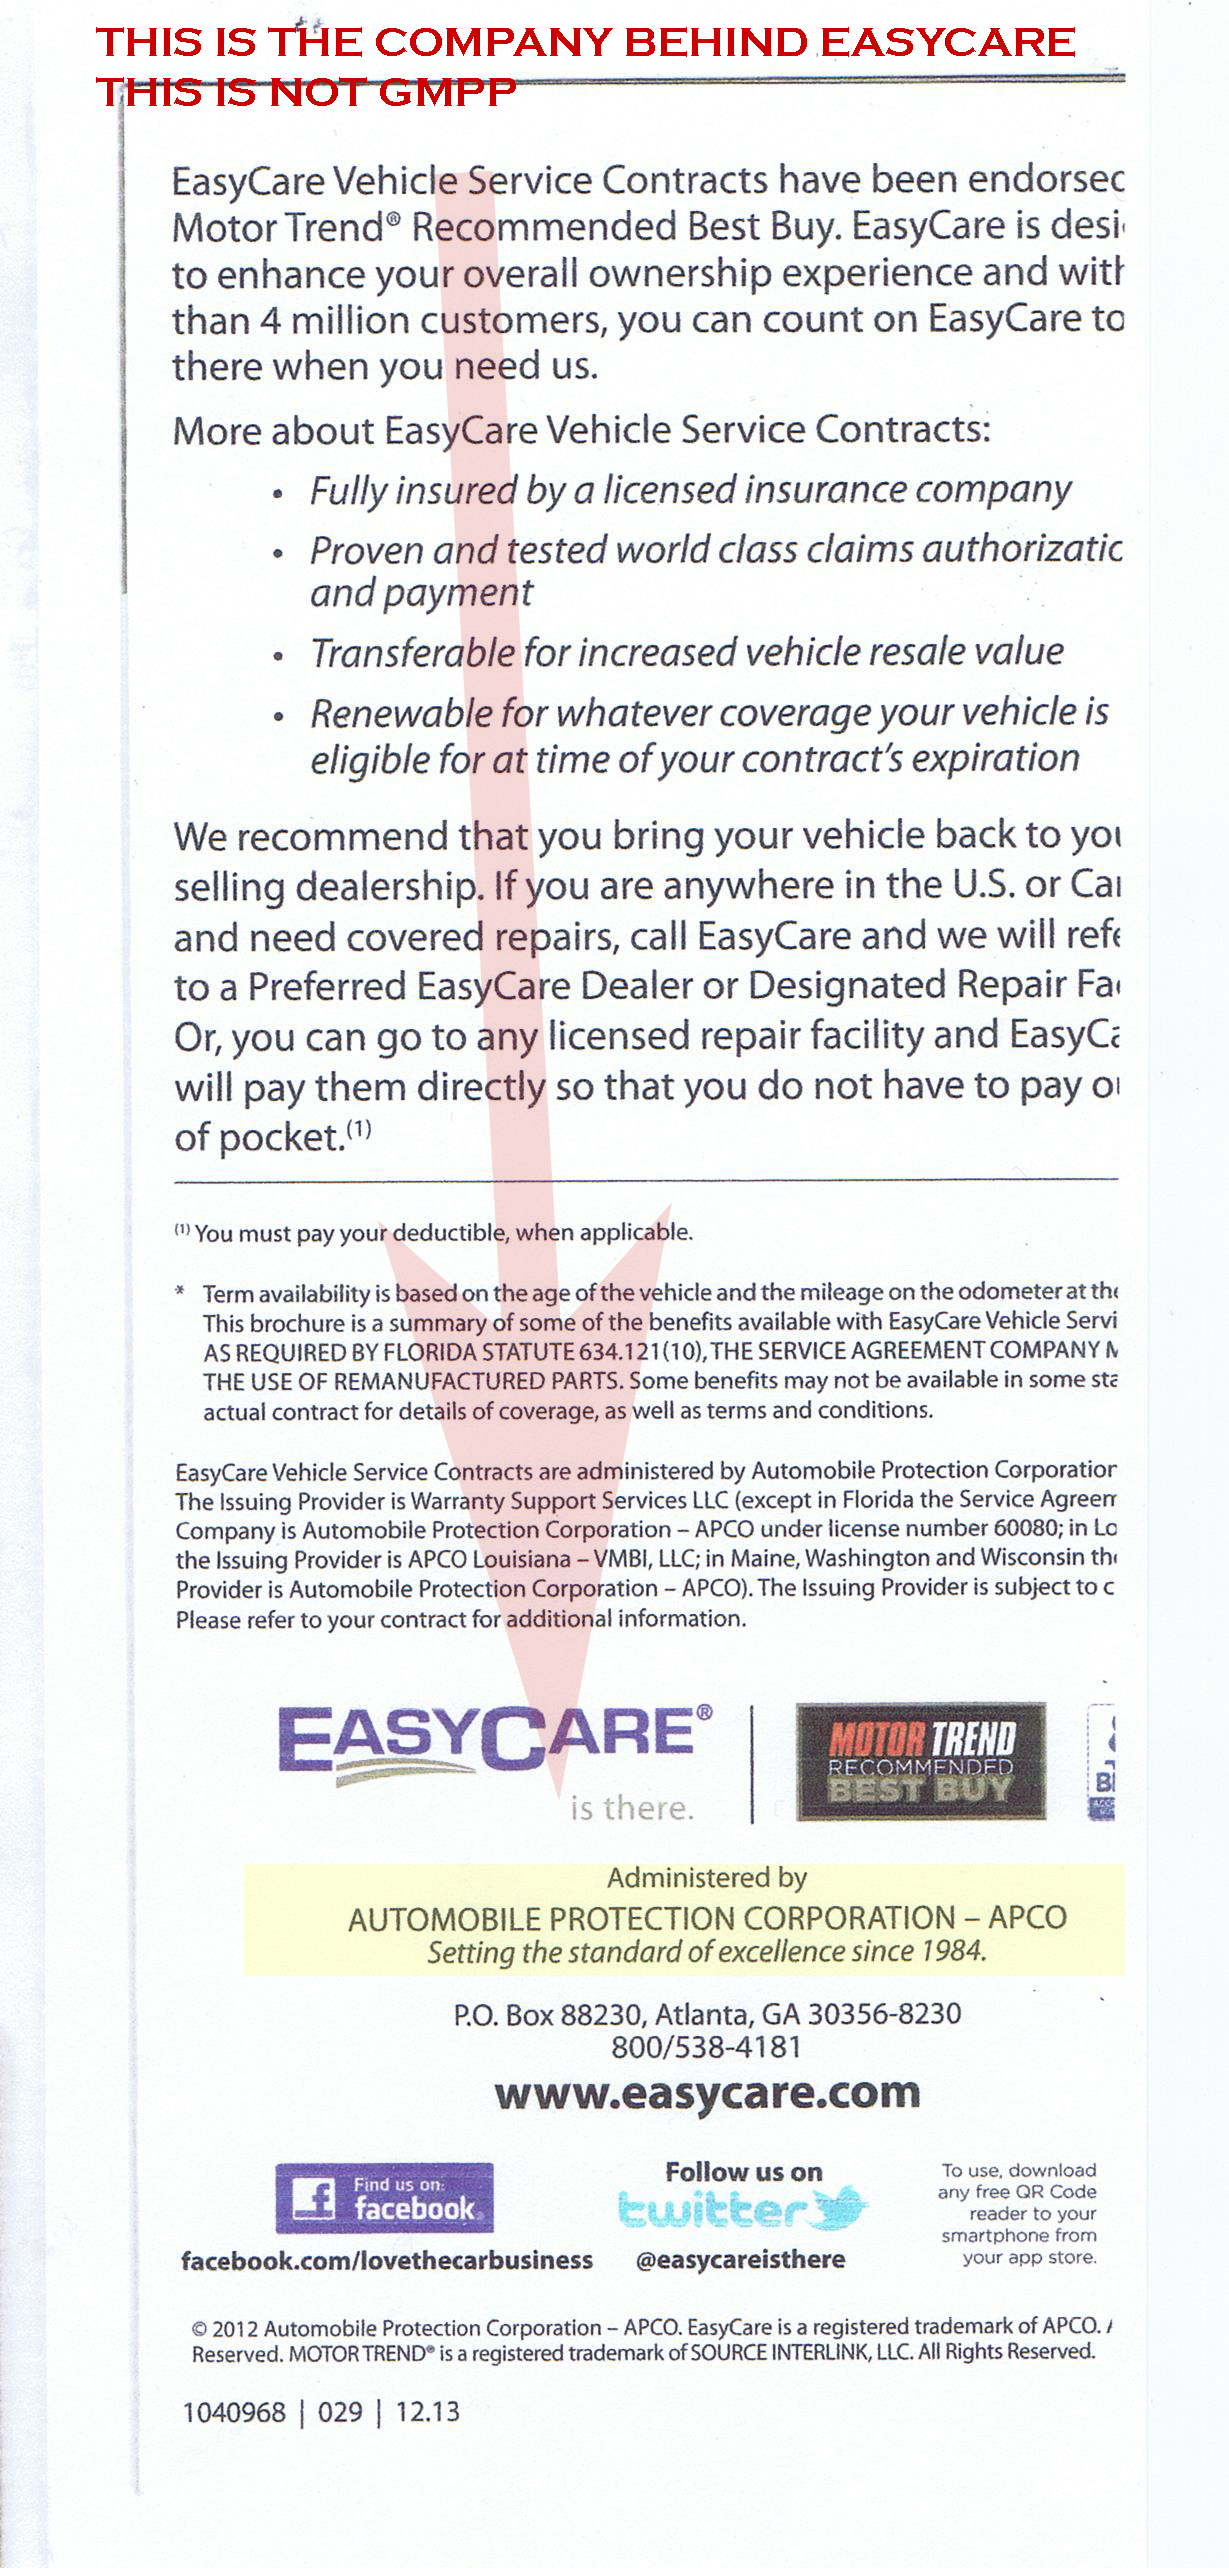 Easycare brochure back showing company behind easycare. 